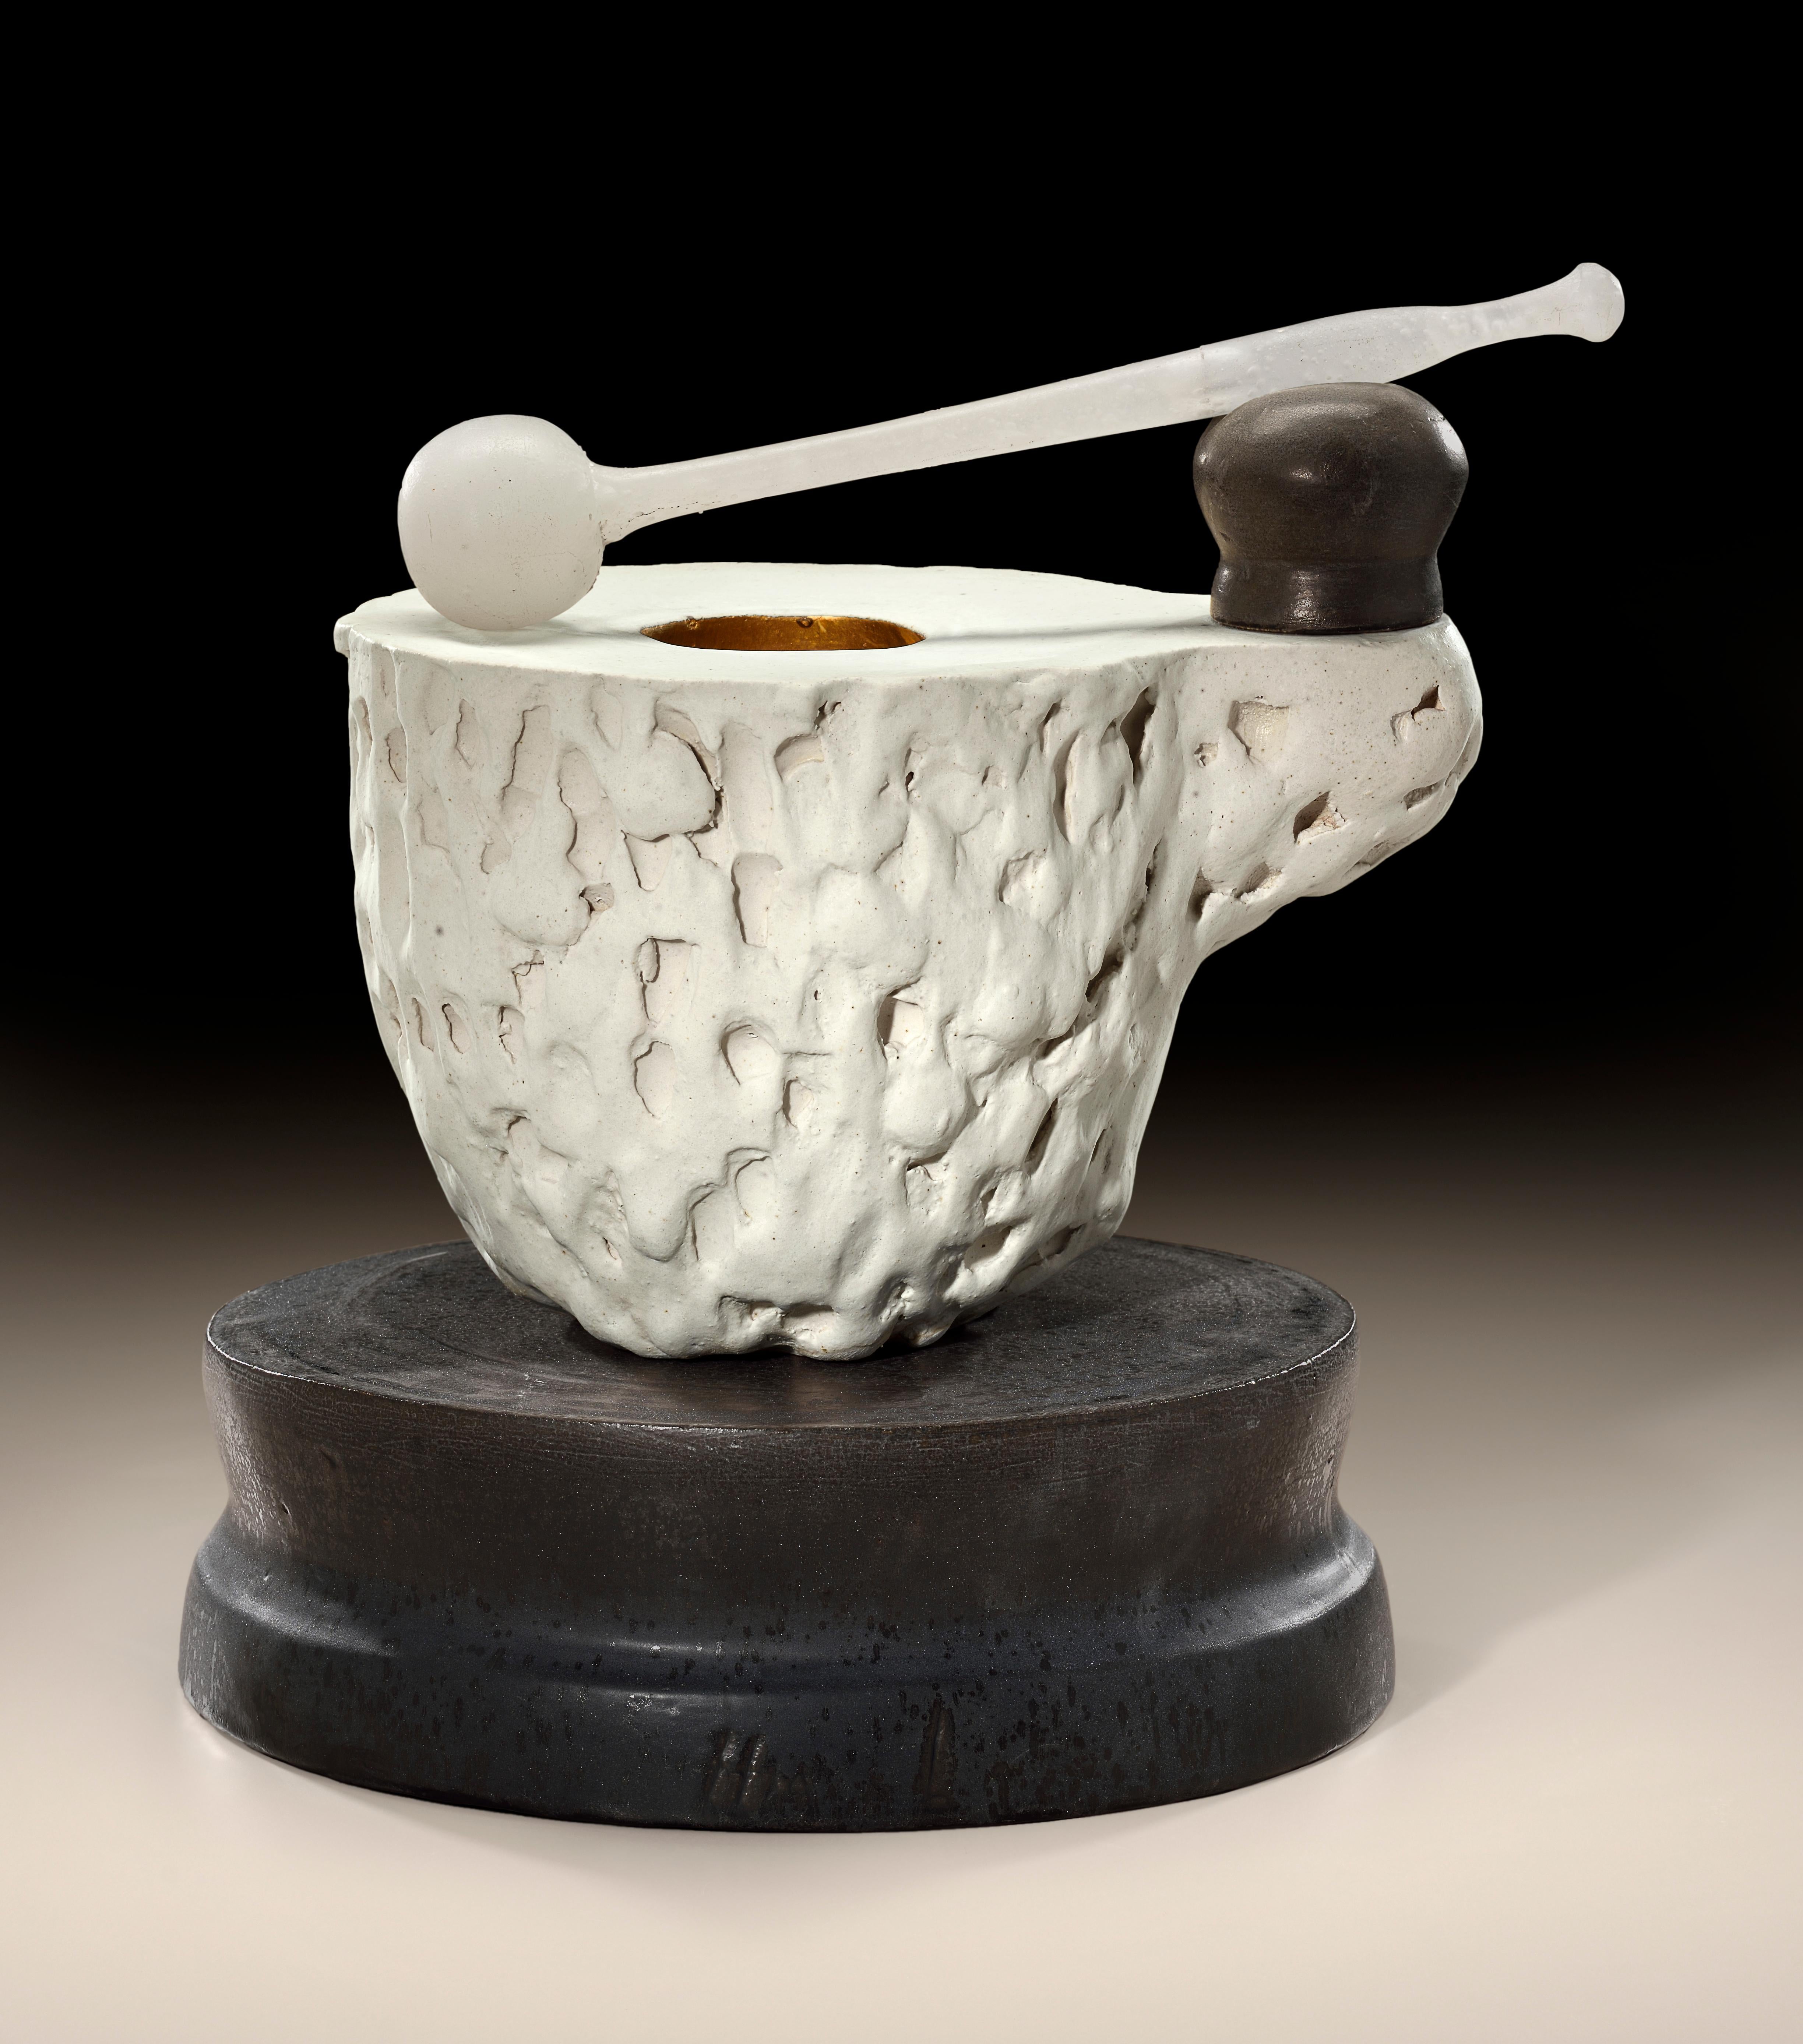 Modern Richard Hirsch Ceramic Mortar and Glass Pestle Sculpture #1, 2020 For Sale